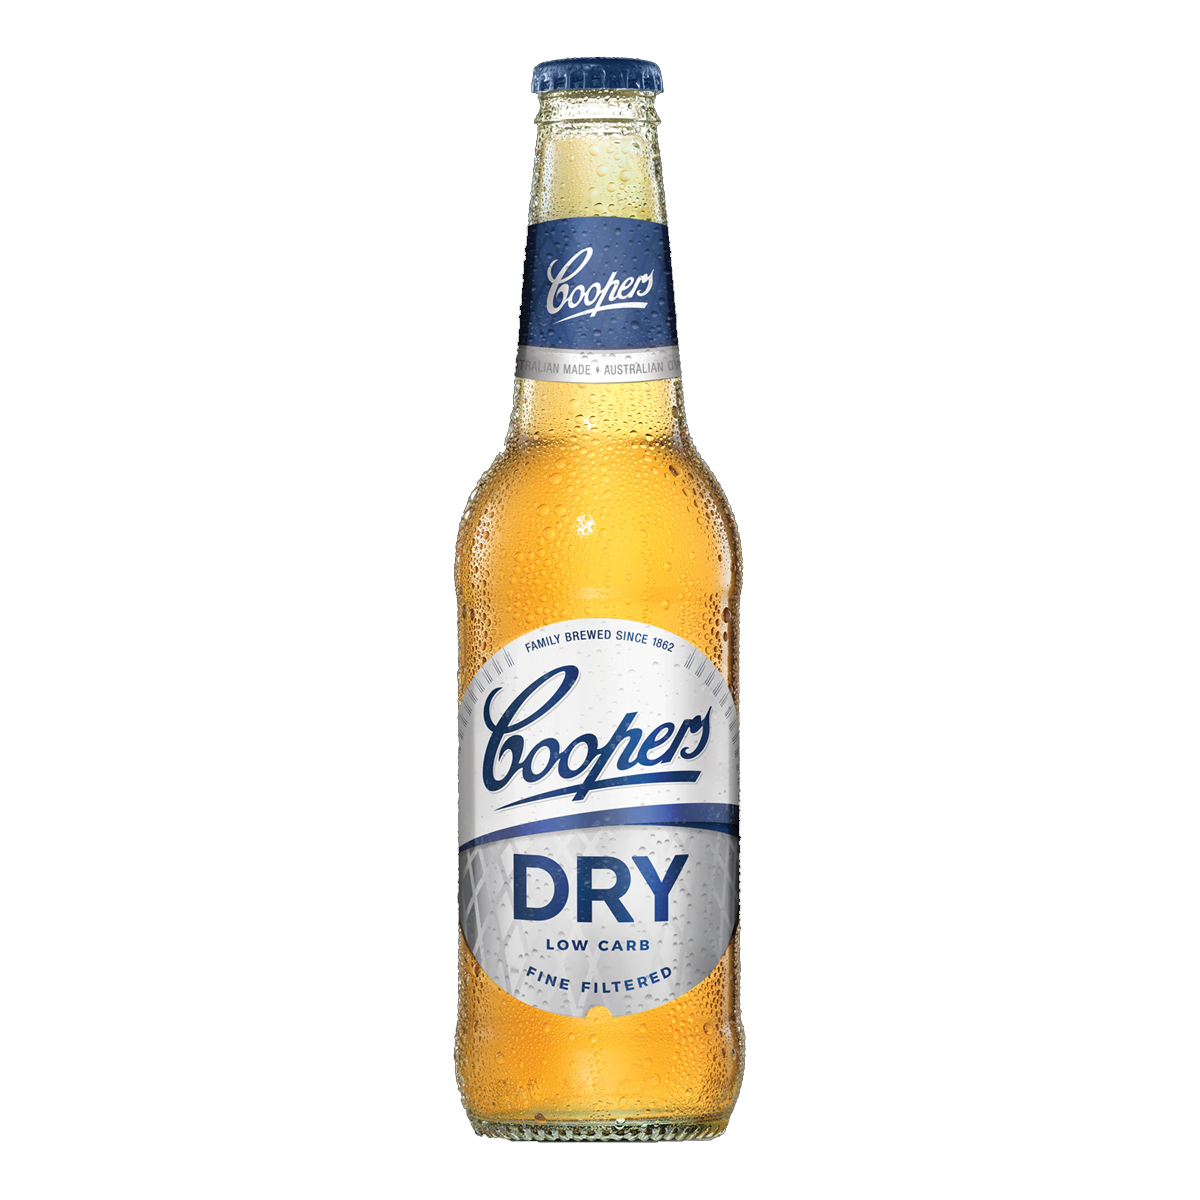 Coopers Dry 24x 355ml bottles